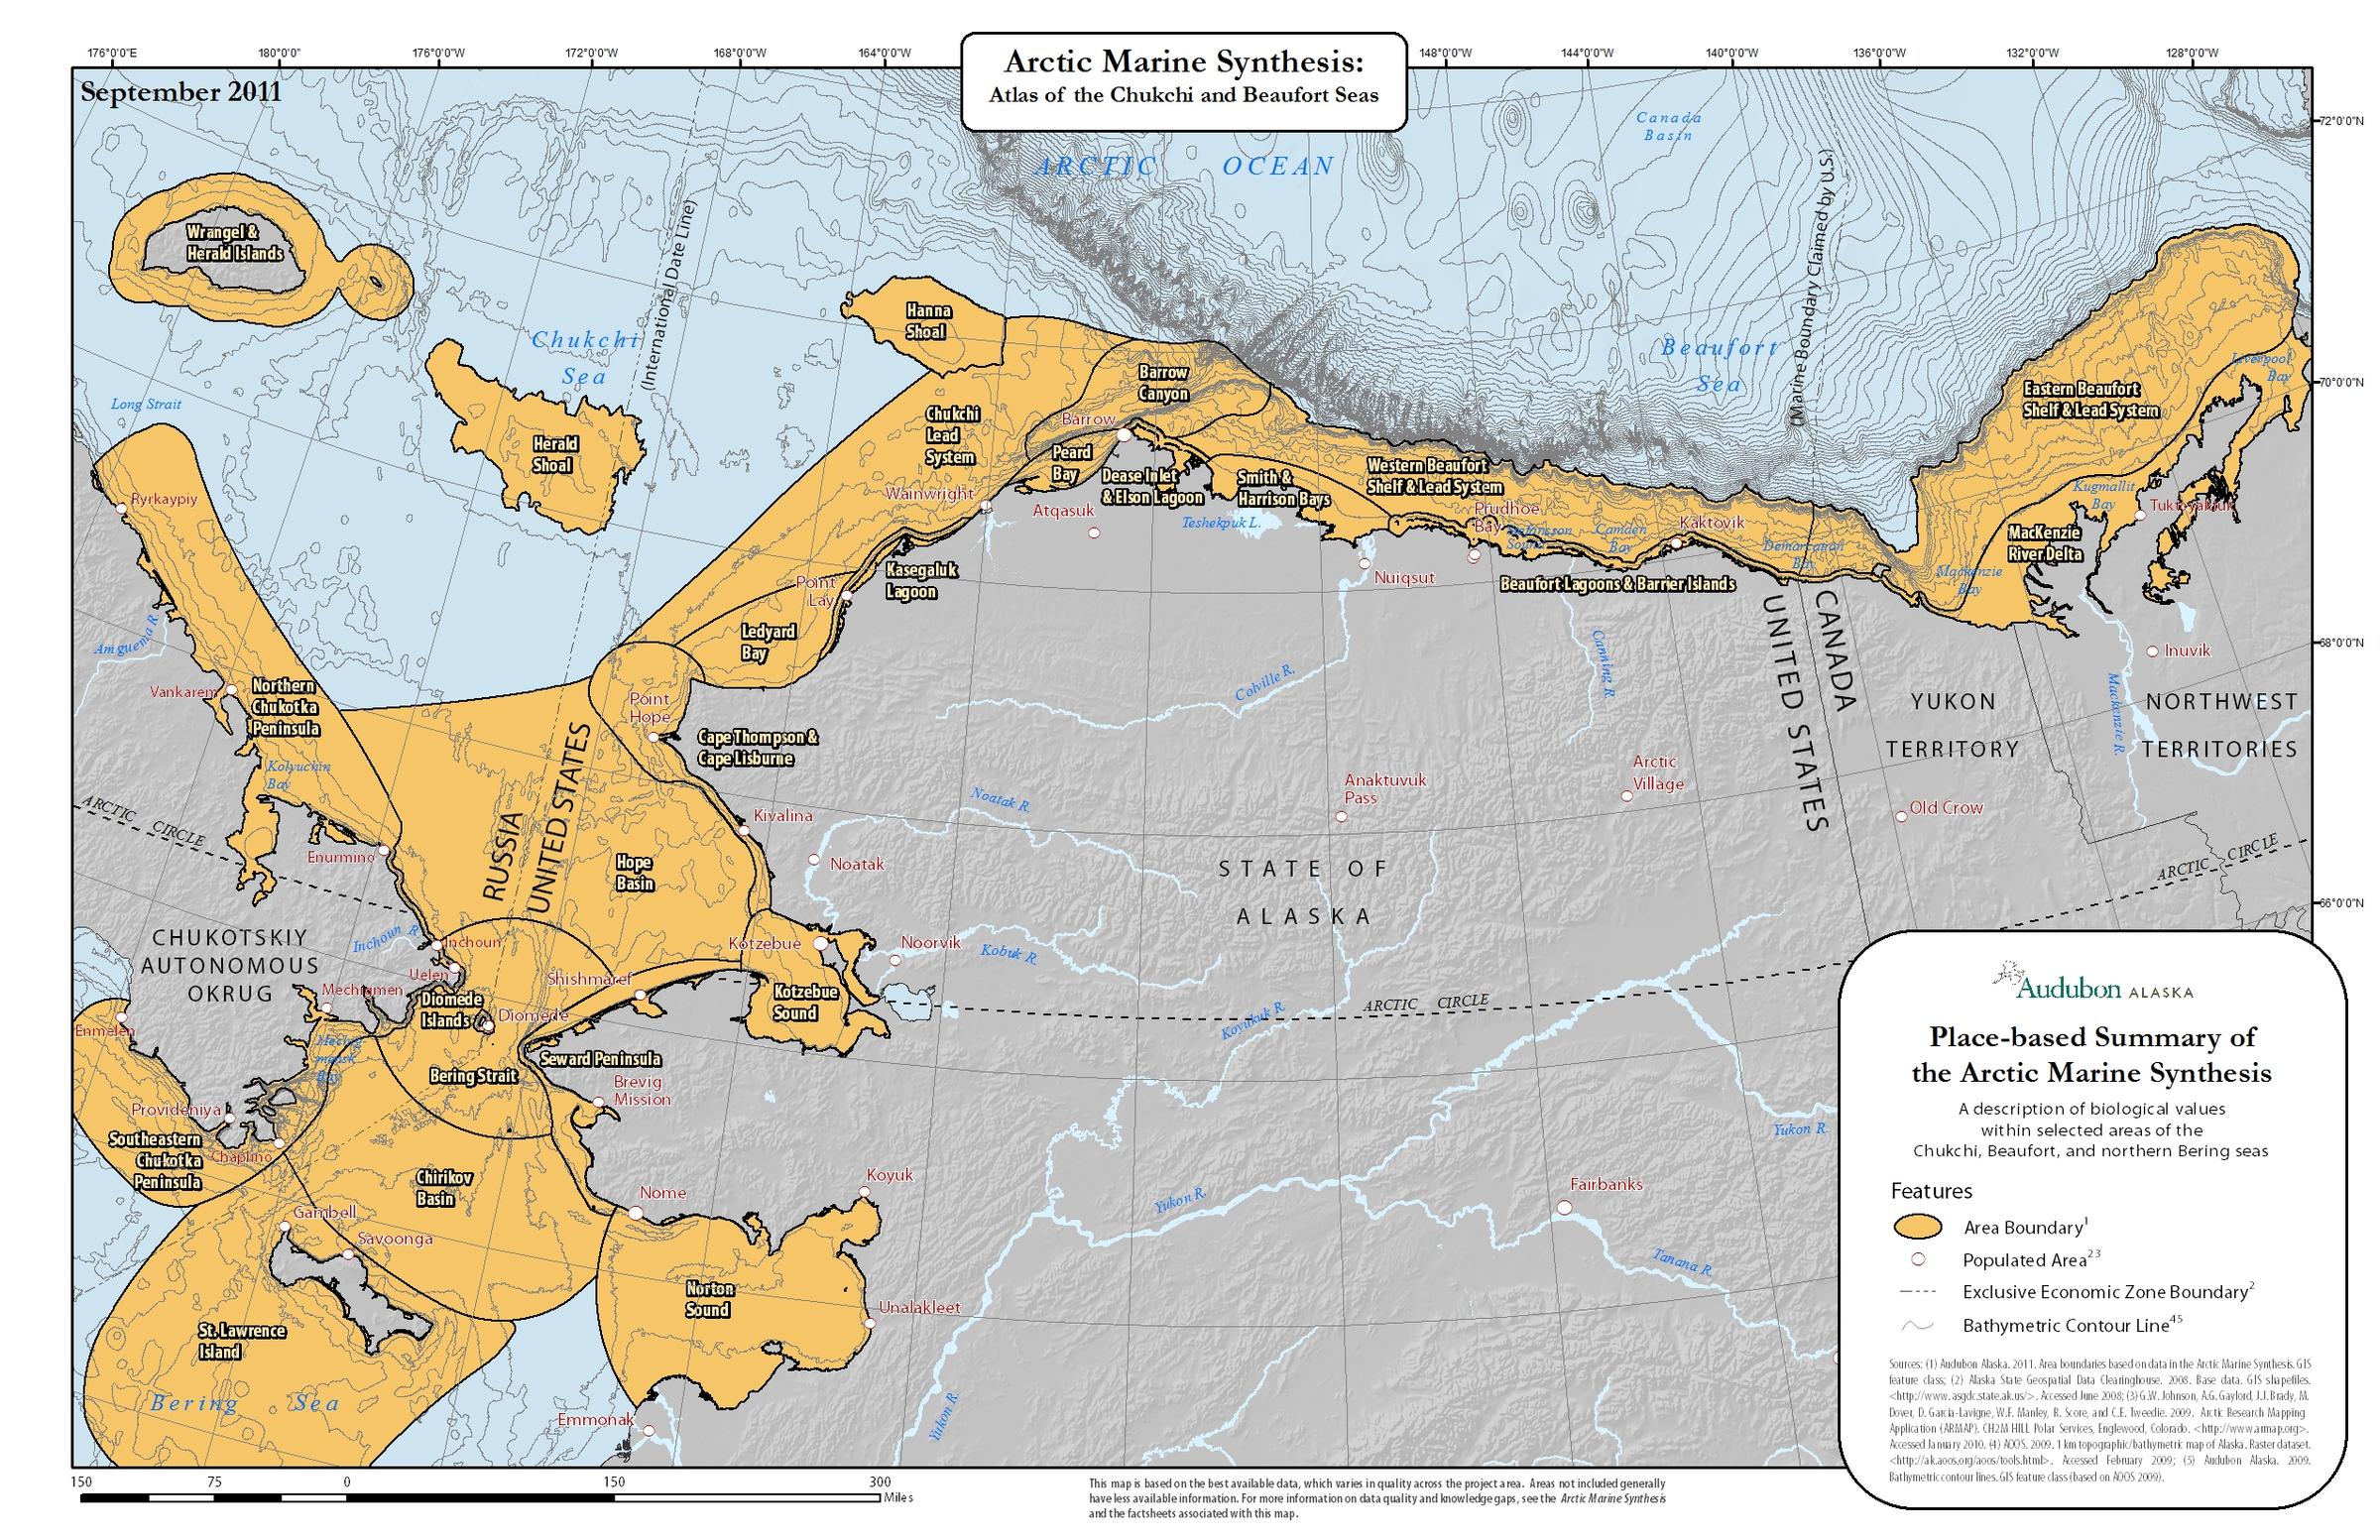 Arctic Marine Atlas Place-based Summary